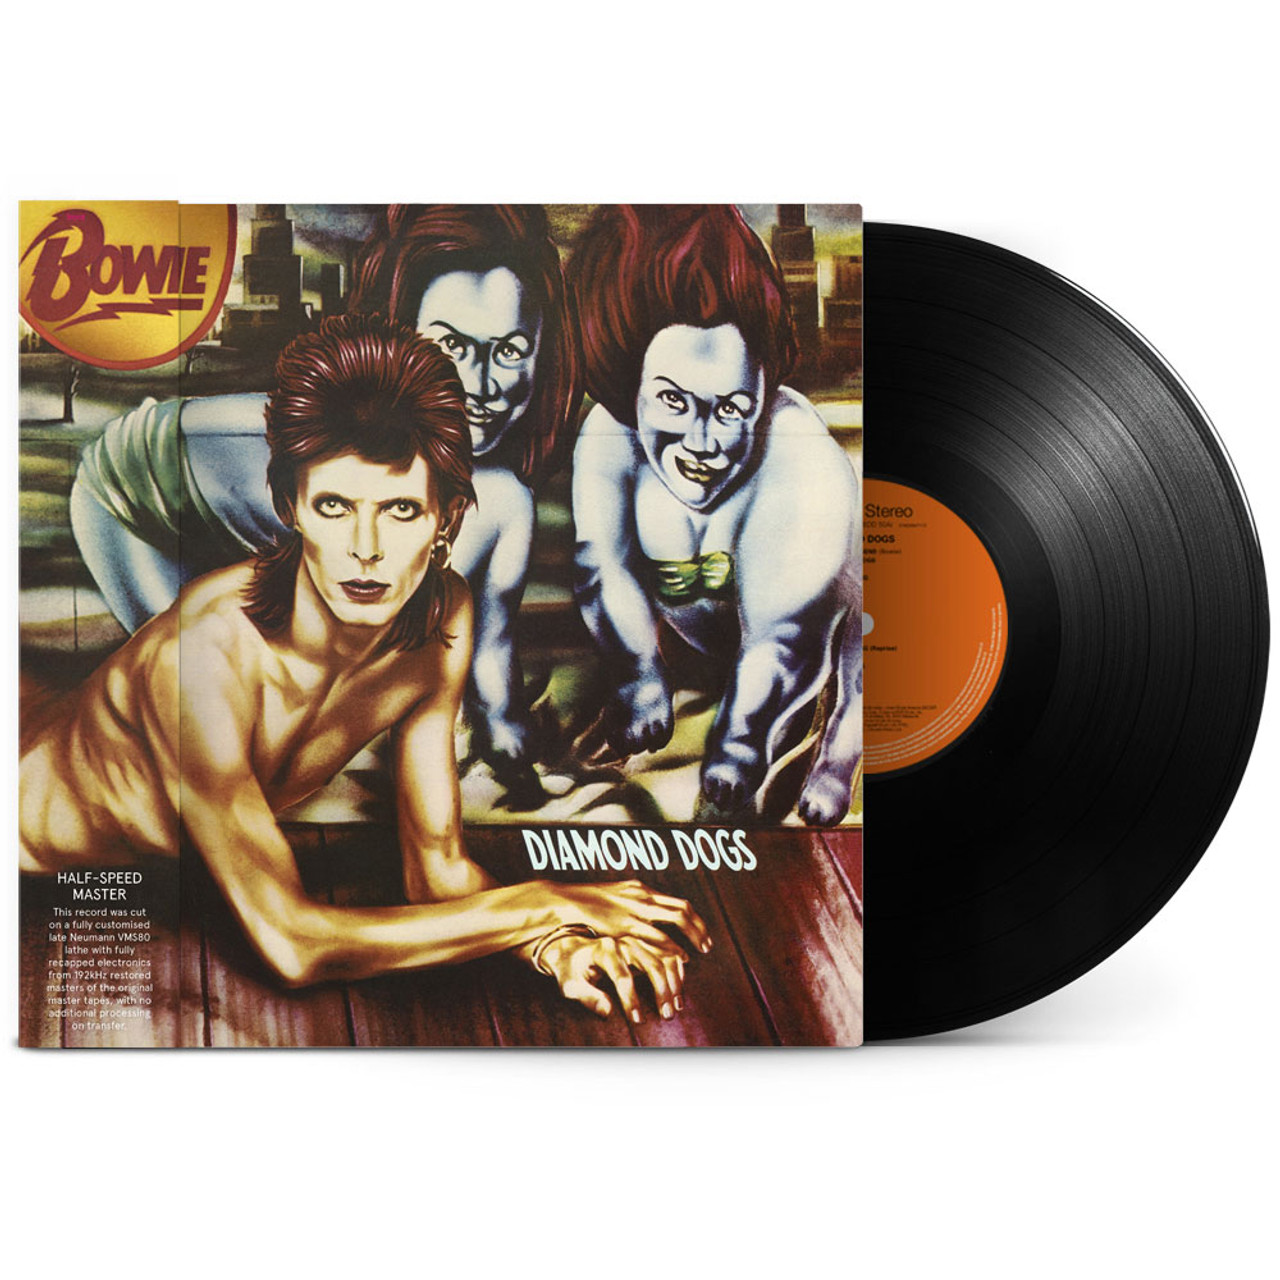 David Bowie - Diamond Dogs (Half-Speed Mastered)